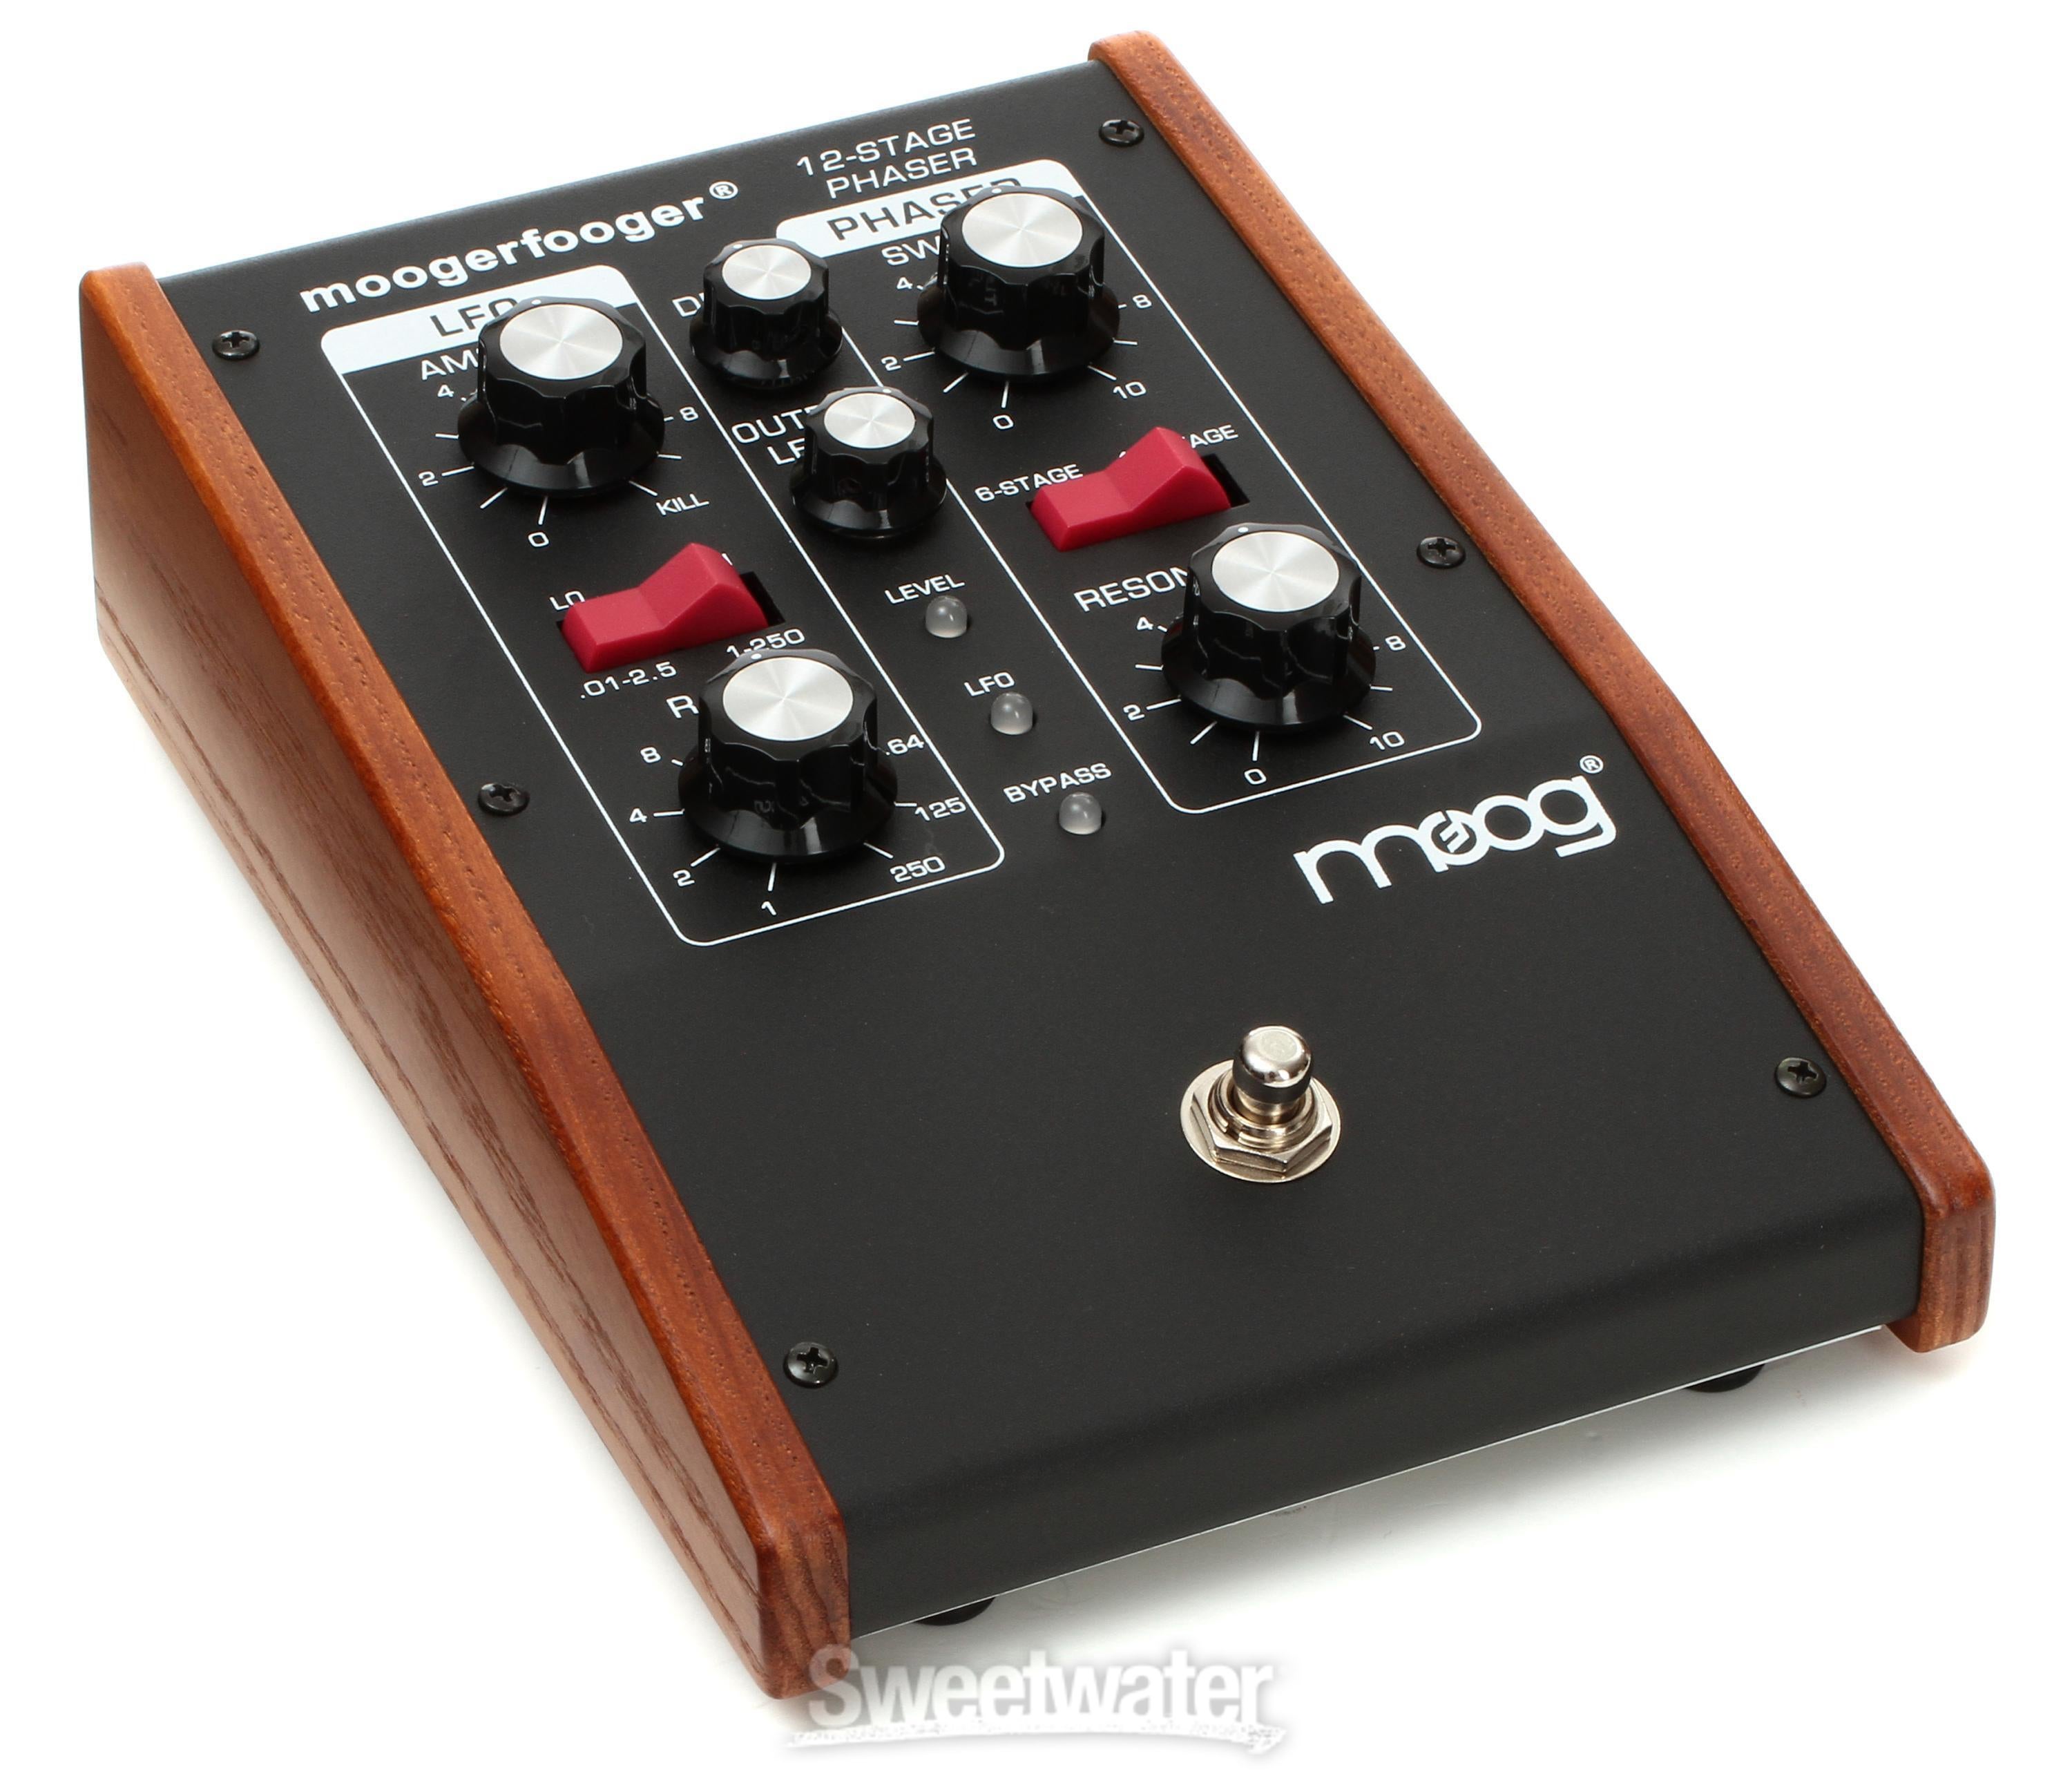 Moog Moogerfooger MF-103 12-Stage Phaser Pedal